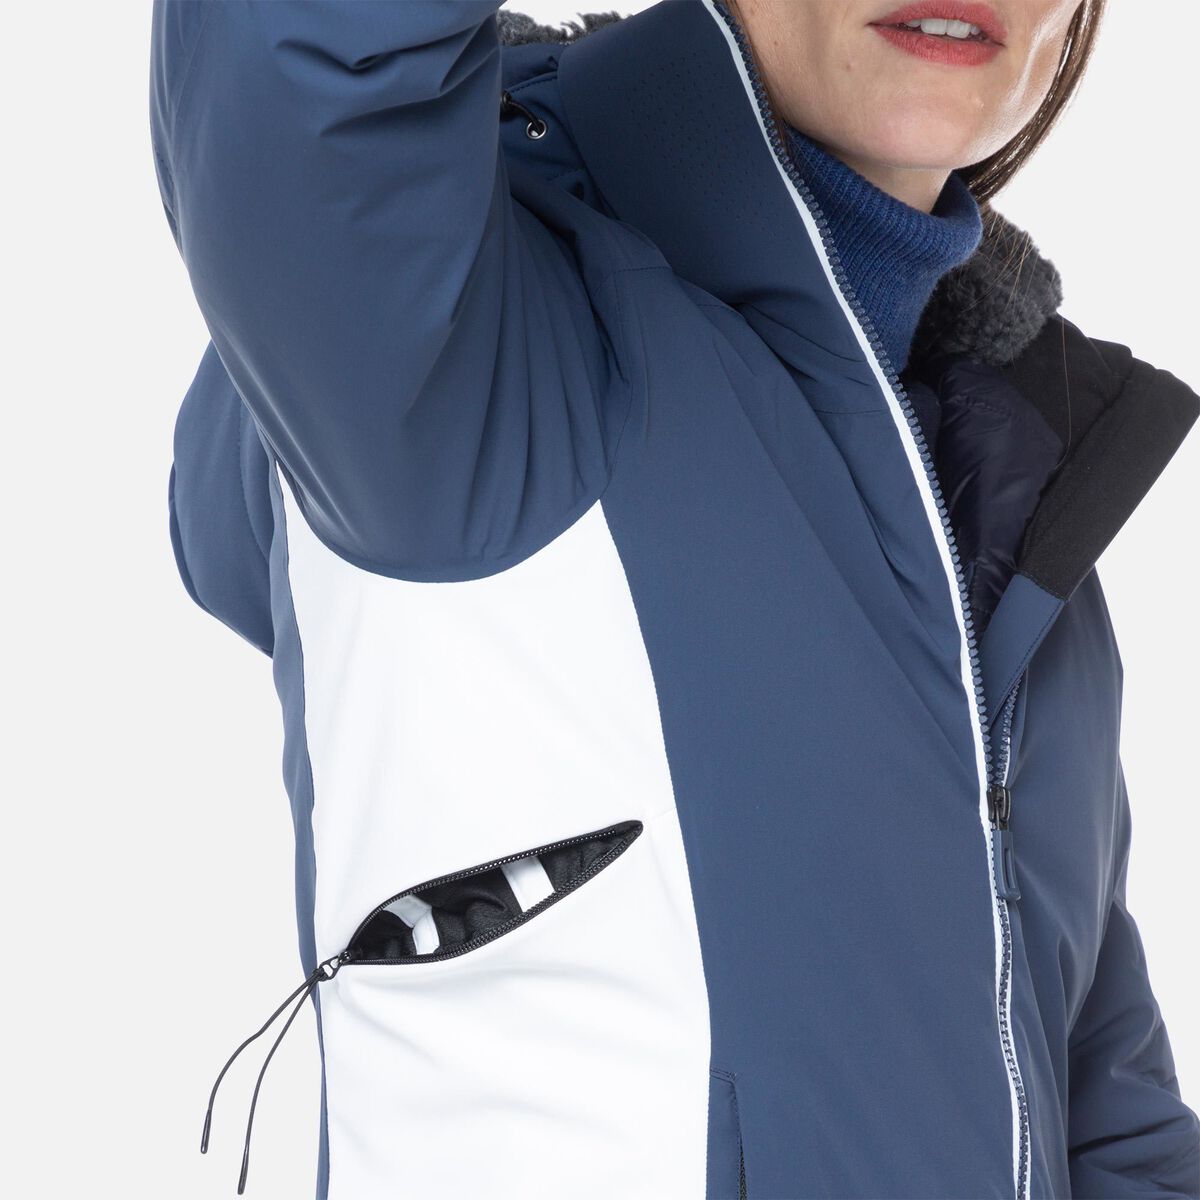 Women's Strato Ski Jacket